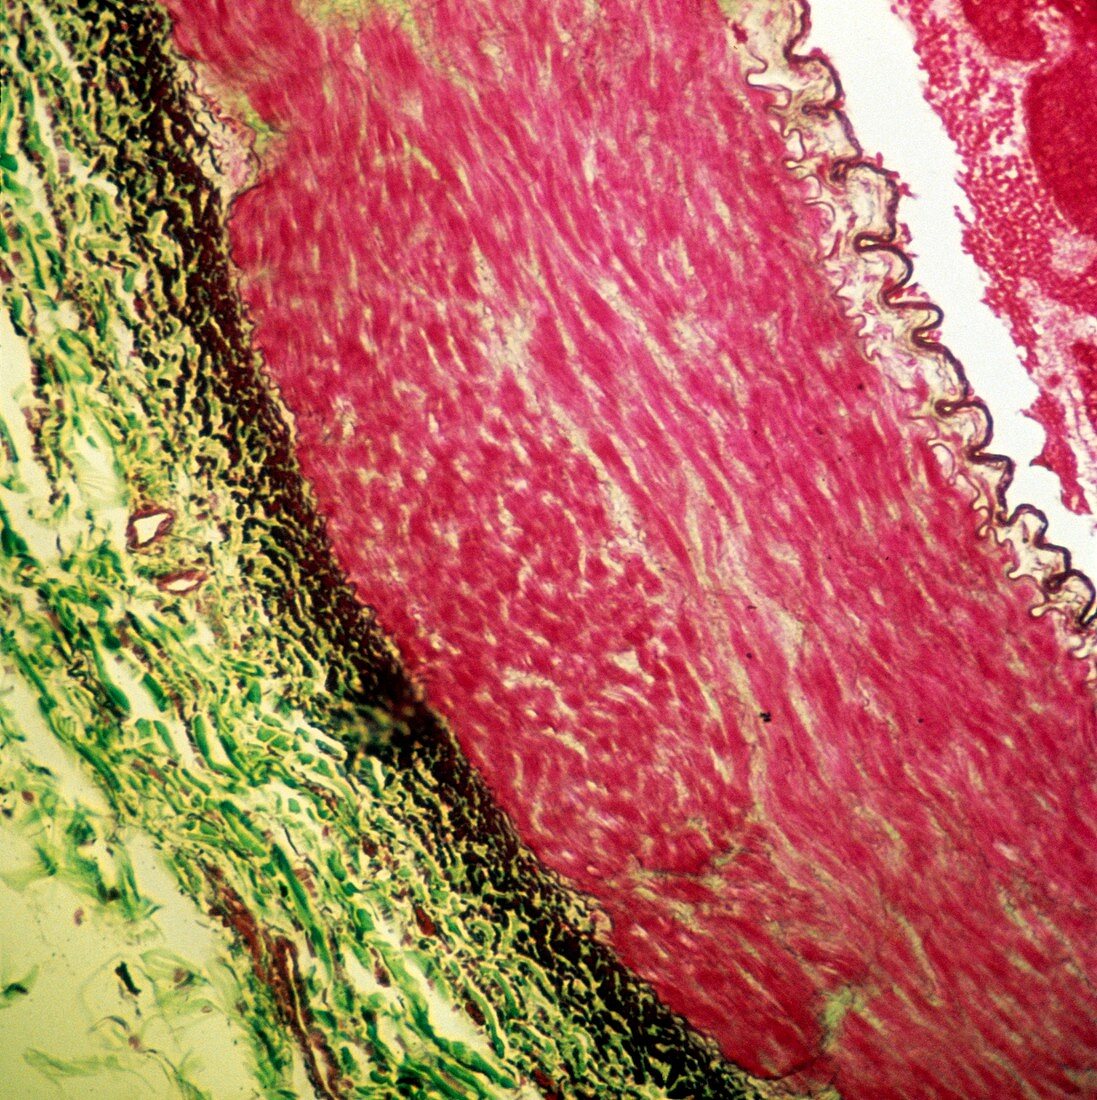 Artery wall,light micrograph